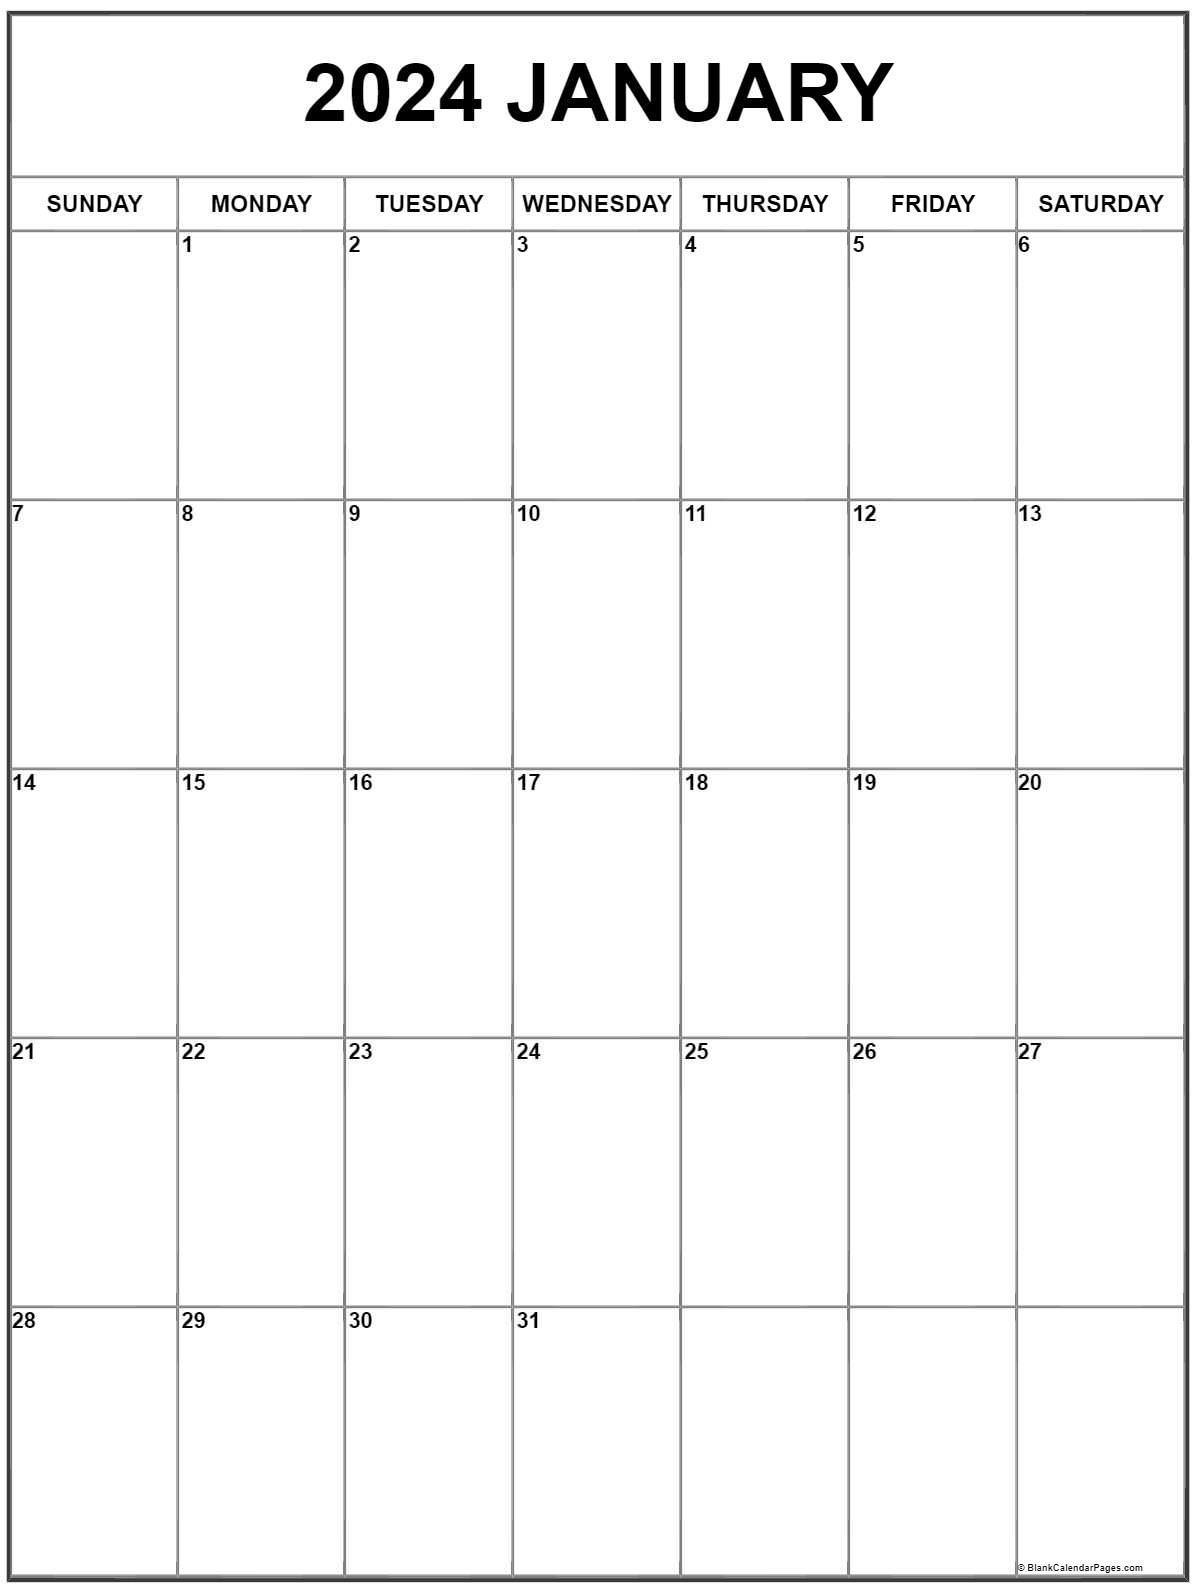 2024 January Calendar Excel Calendar Free Blank April 2024 Calendar